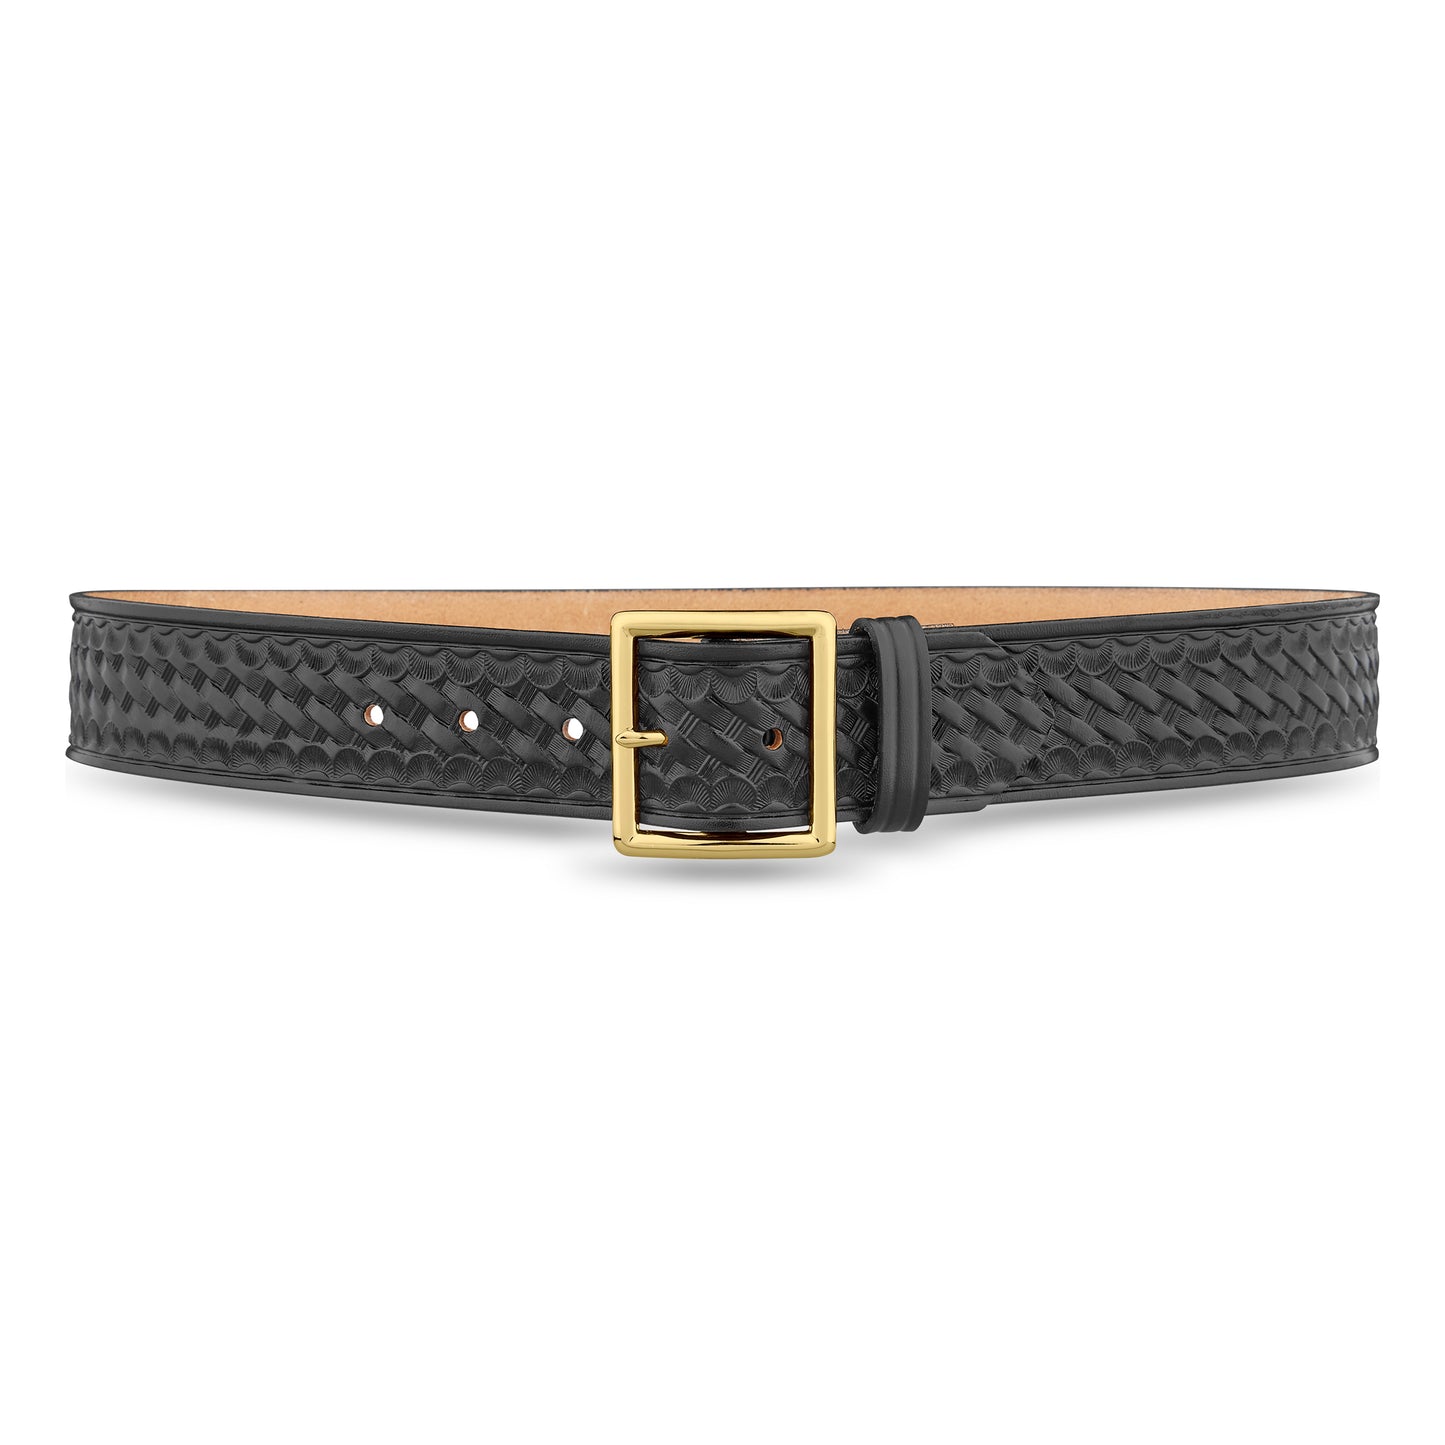 1-3/4" Basketweave Leather Garrison Belt